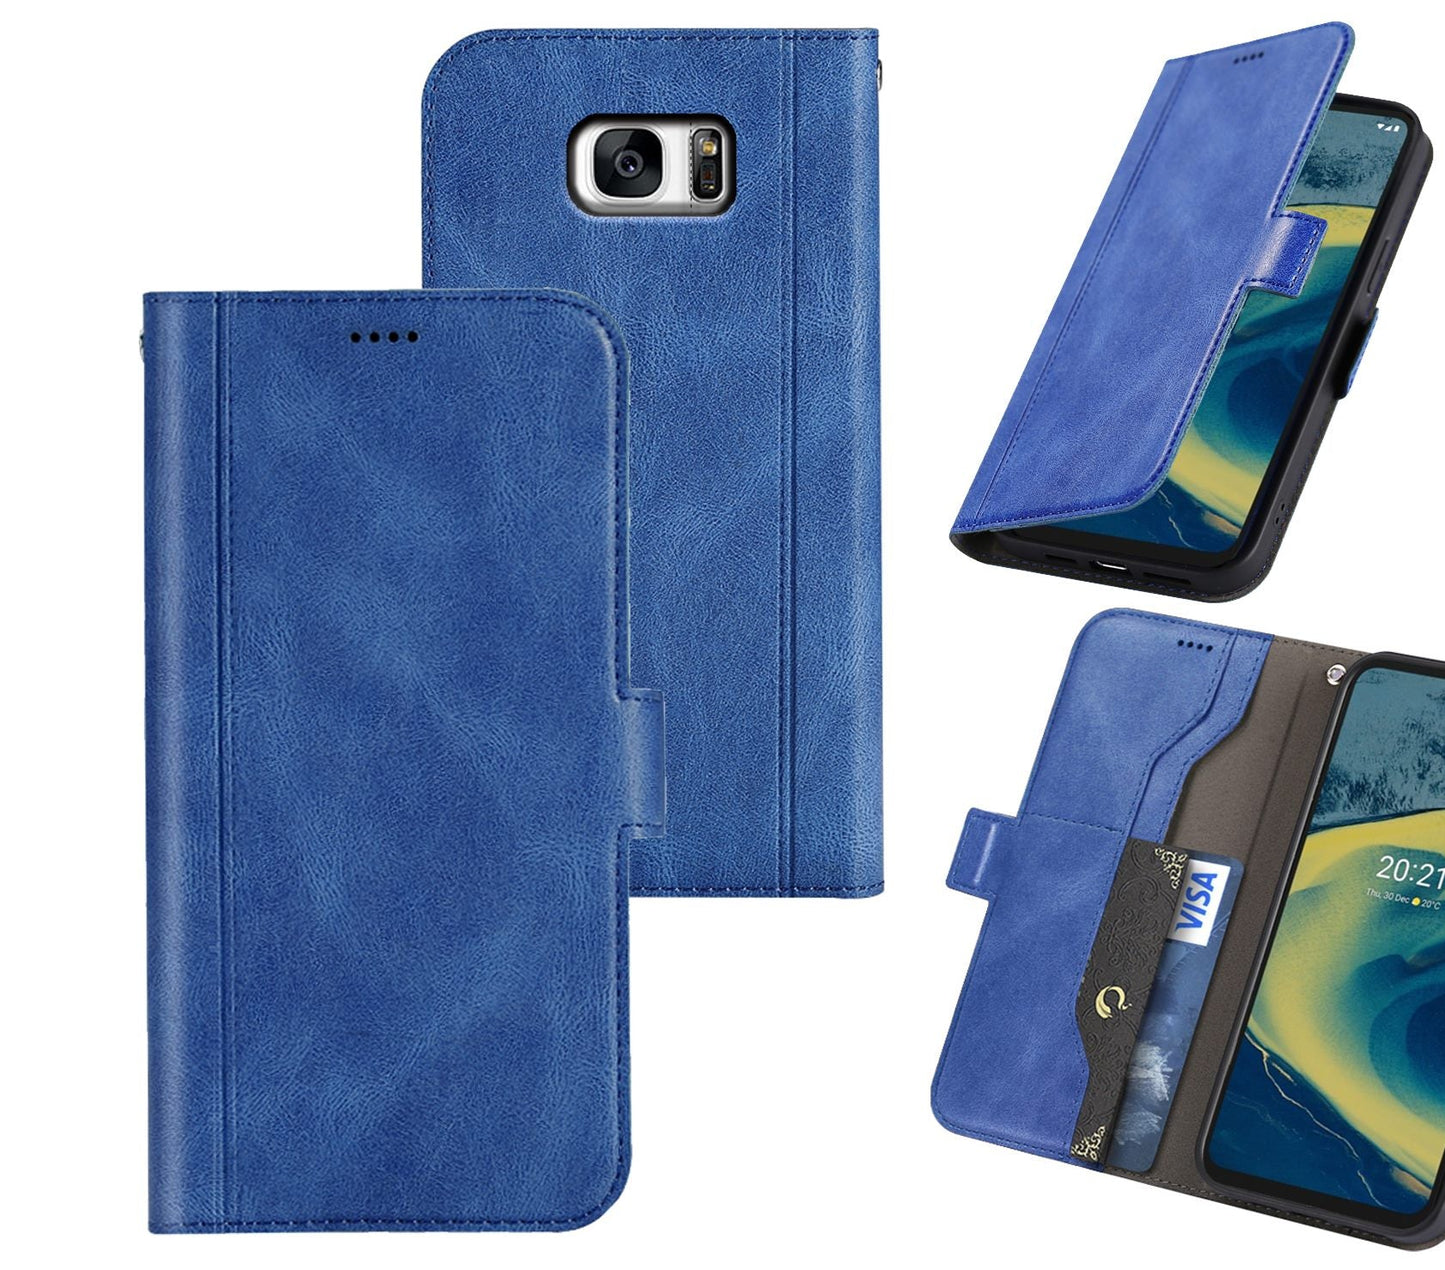 Samsung Galaxy S7 Case Wallet Cover Blue